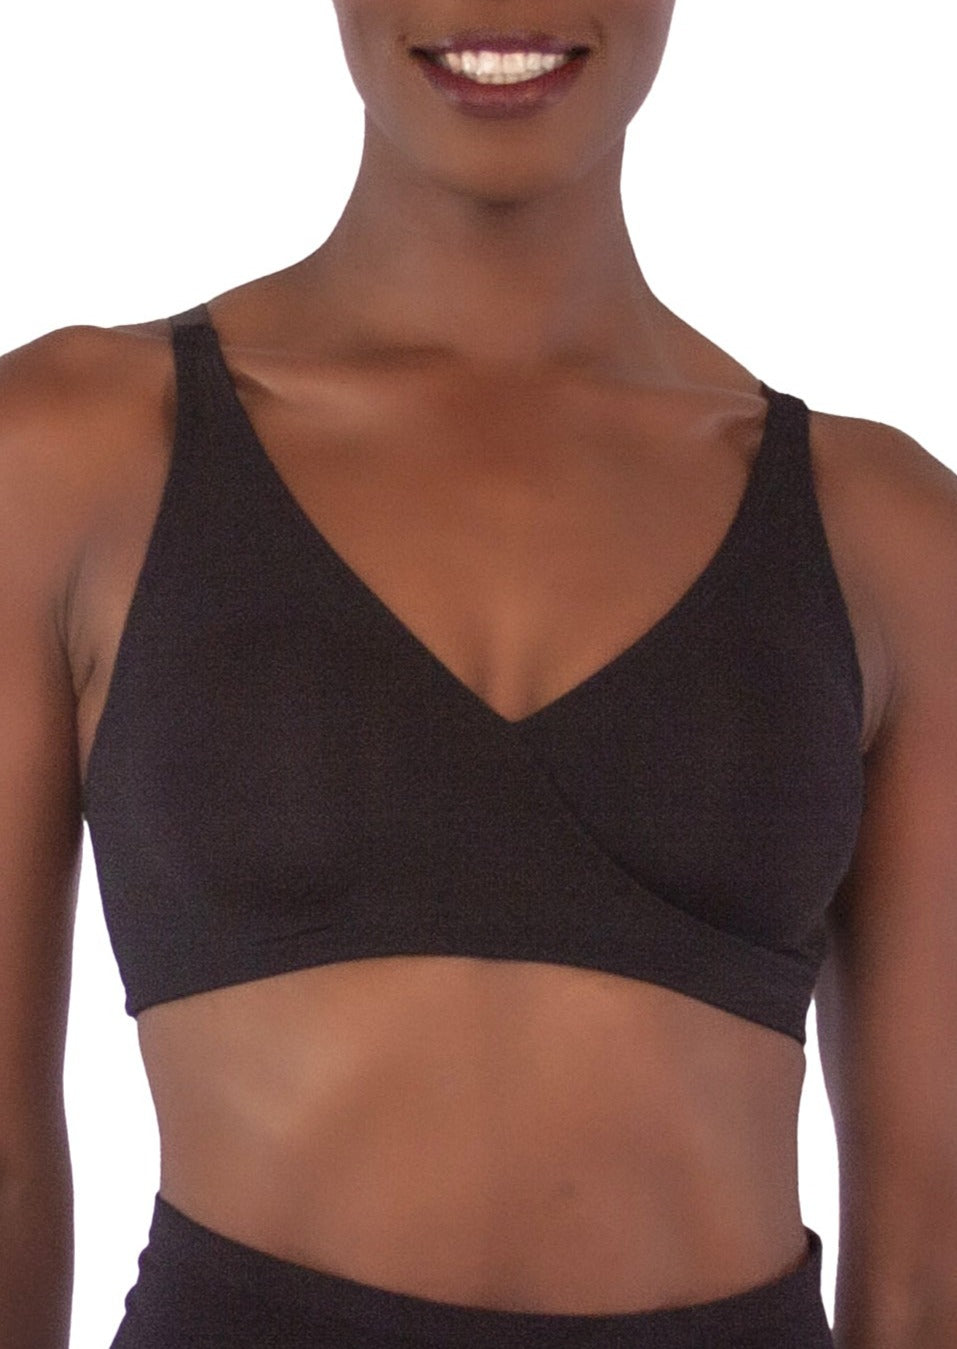 Ivory Rose Fuller Bust wrap front sports bra in black